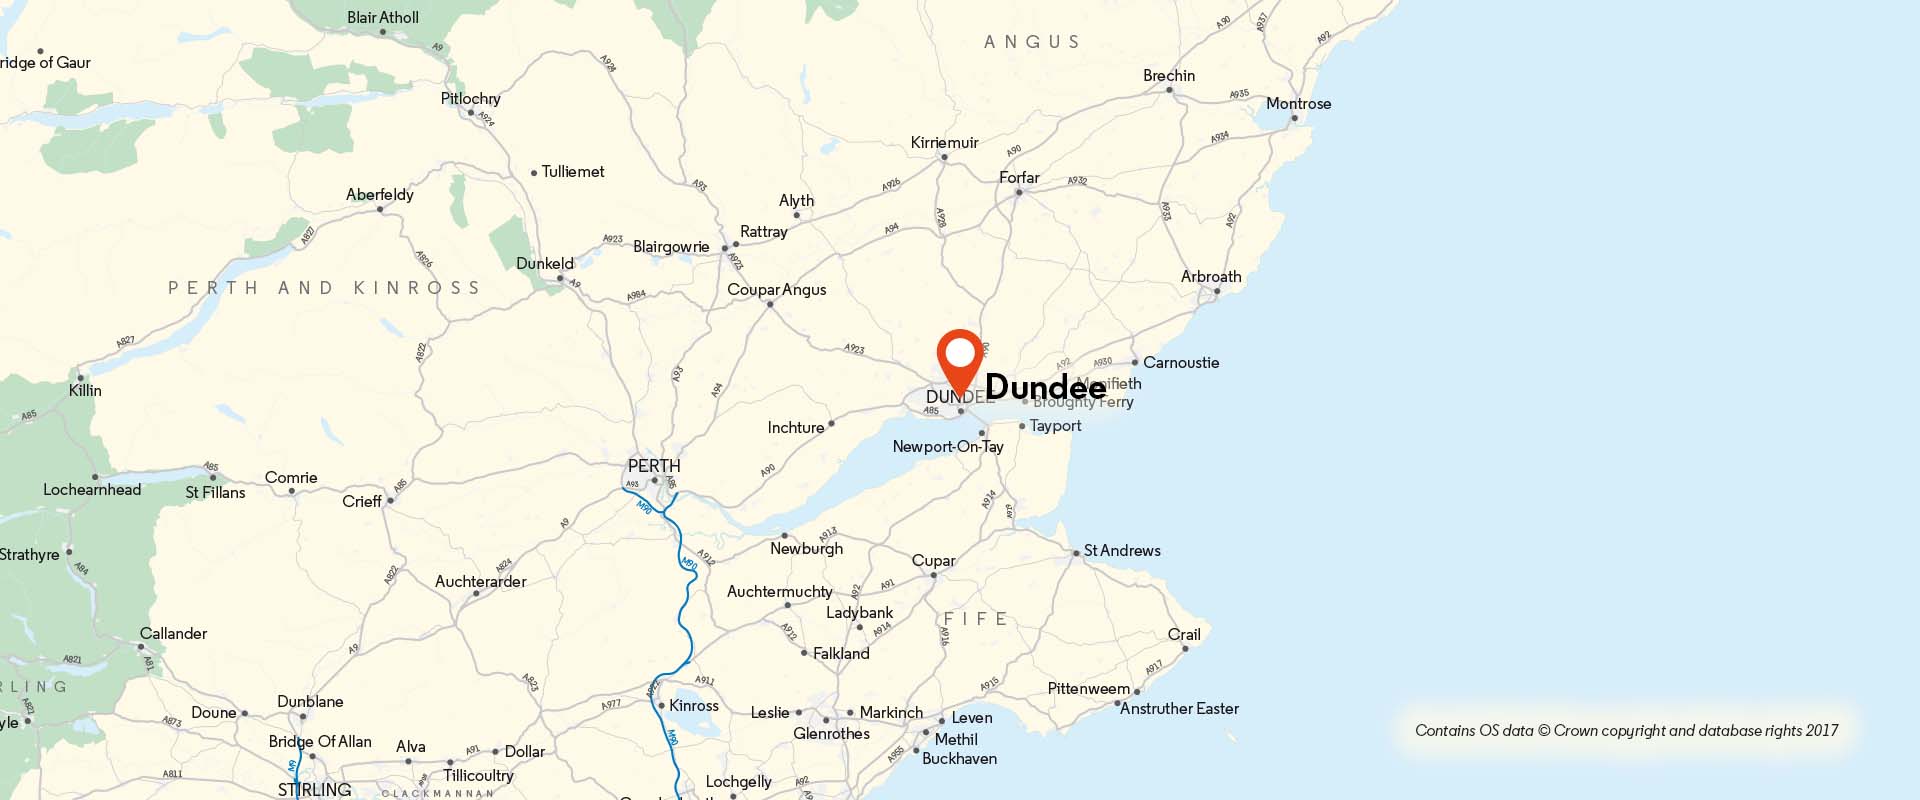 Dundee CoM location